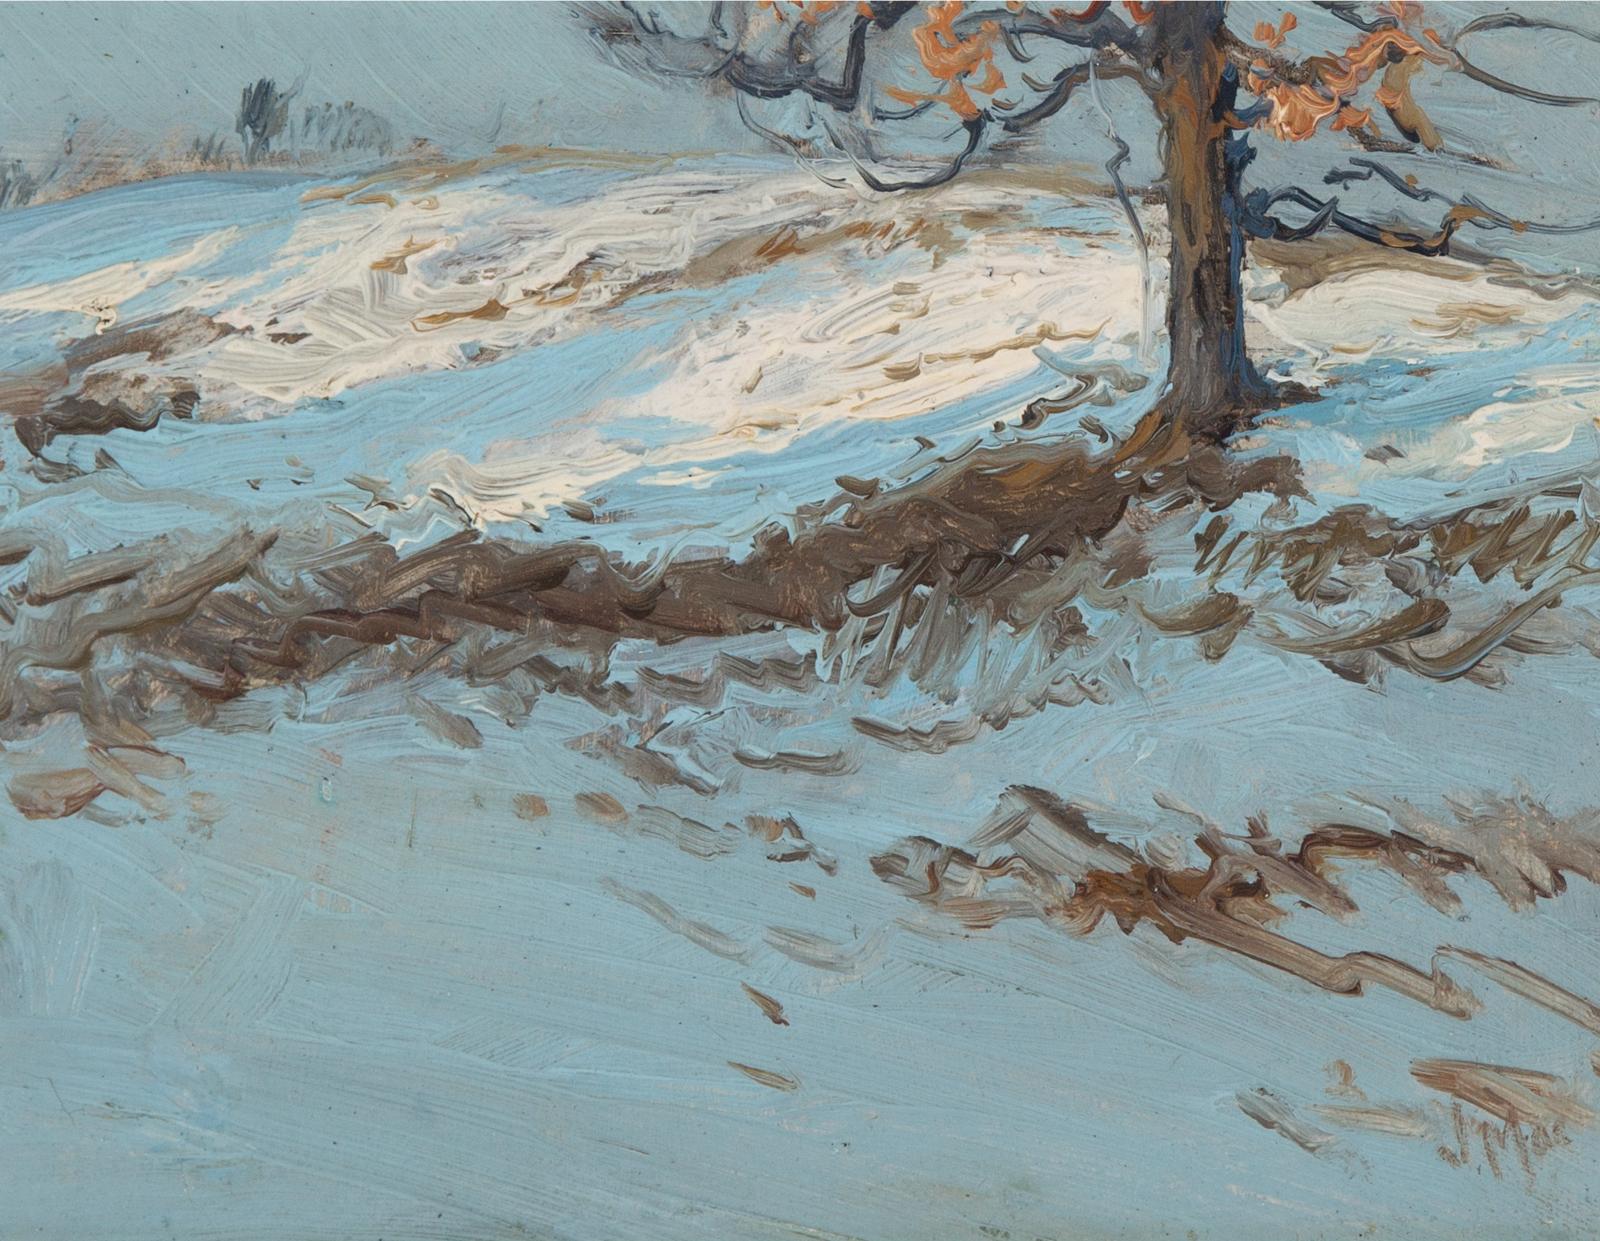 James Edward Hervey (J.E.H.) MacDonald (1873-1932) - Early Snow At High Park, 1913